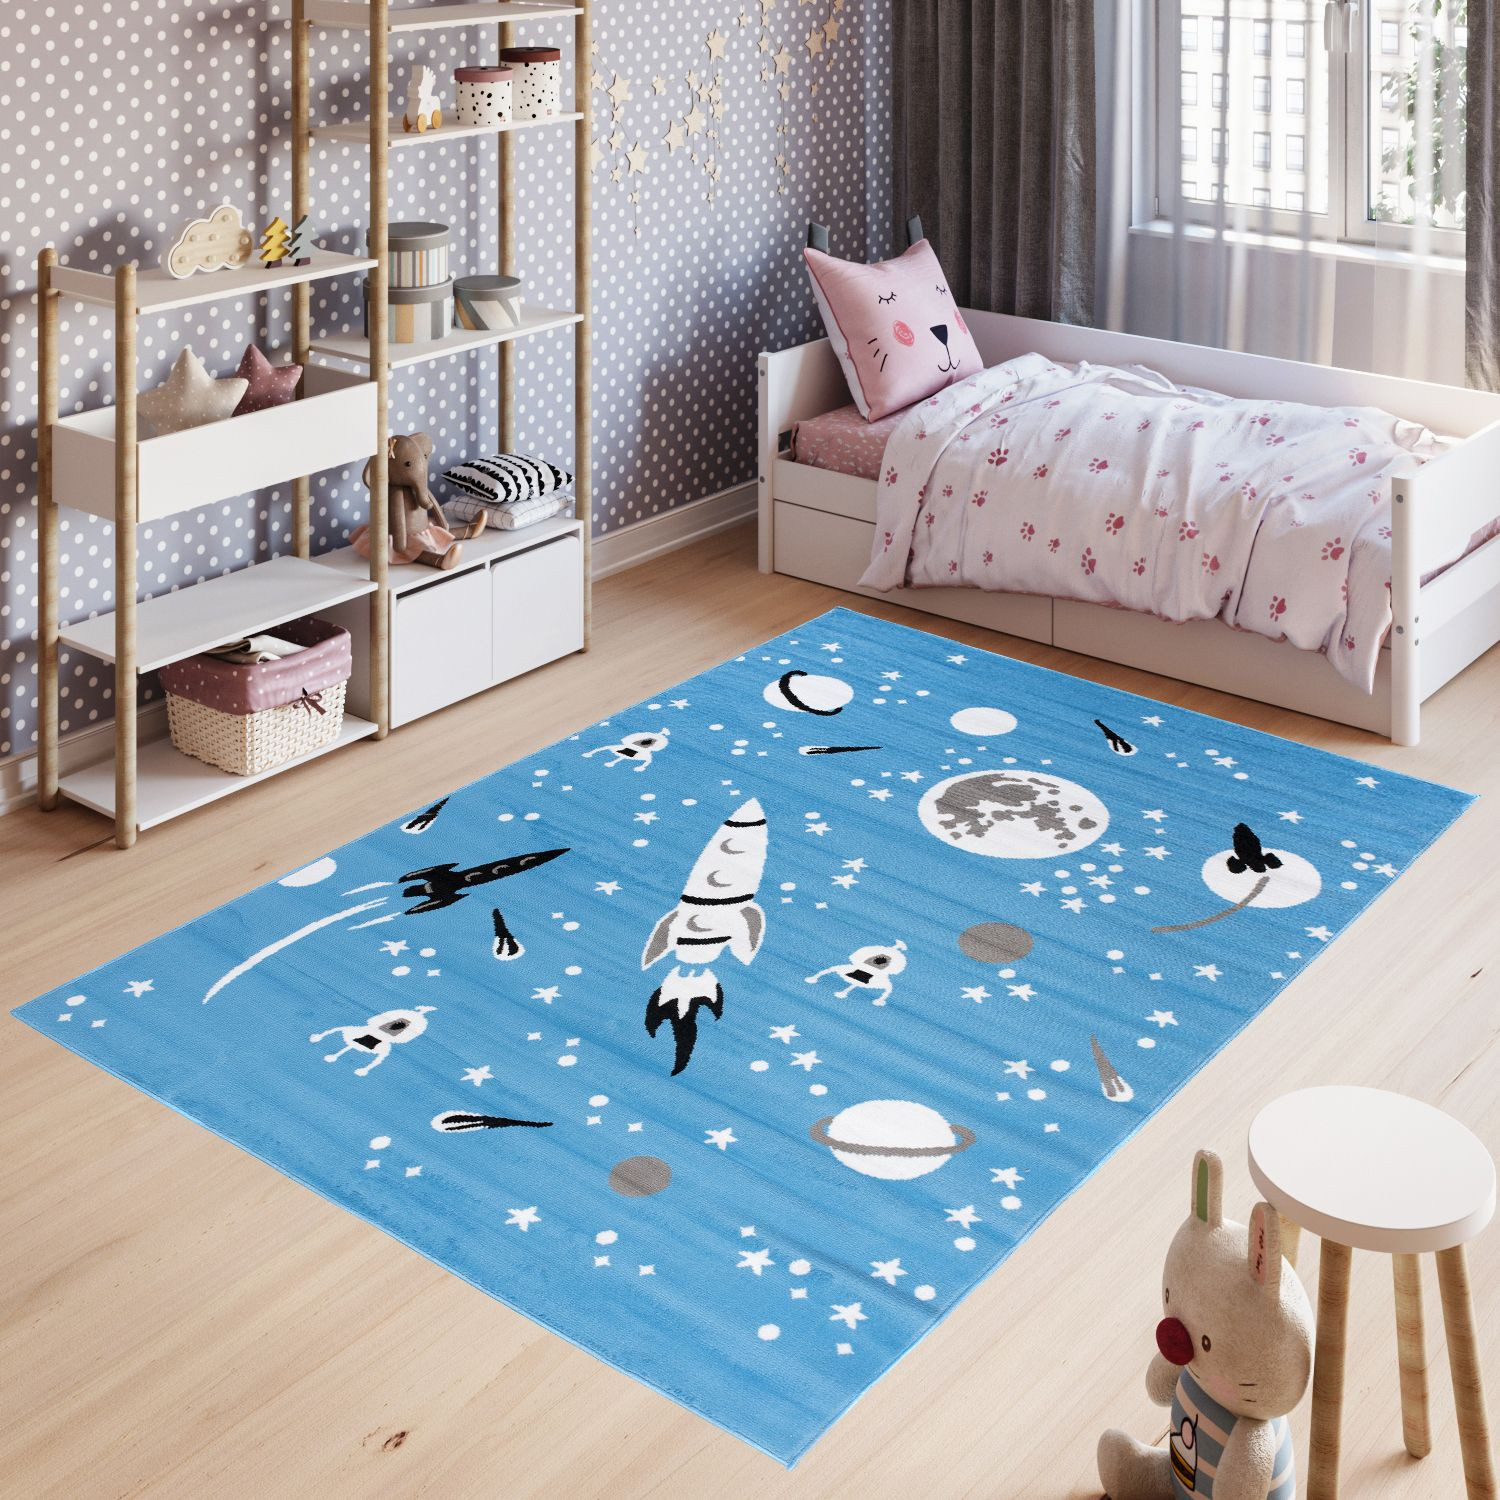 Detský koberec PINKY DE14A Space modrý